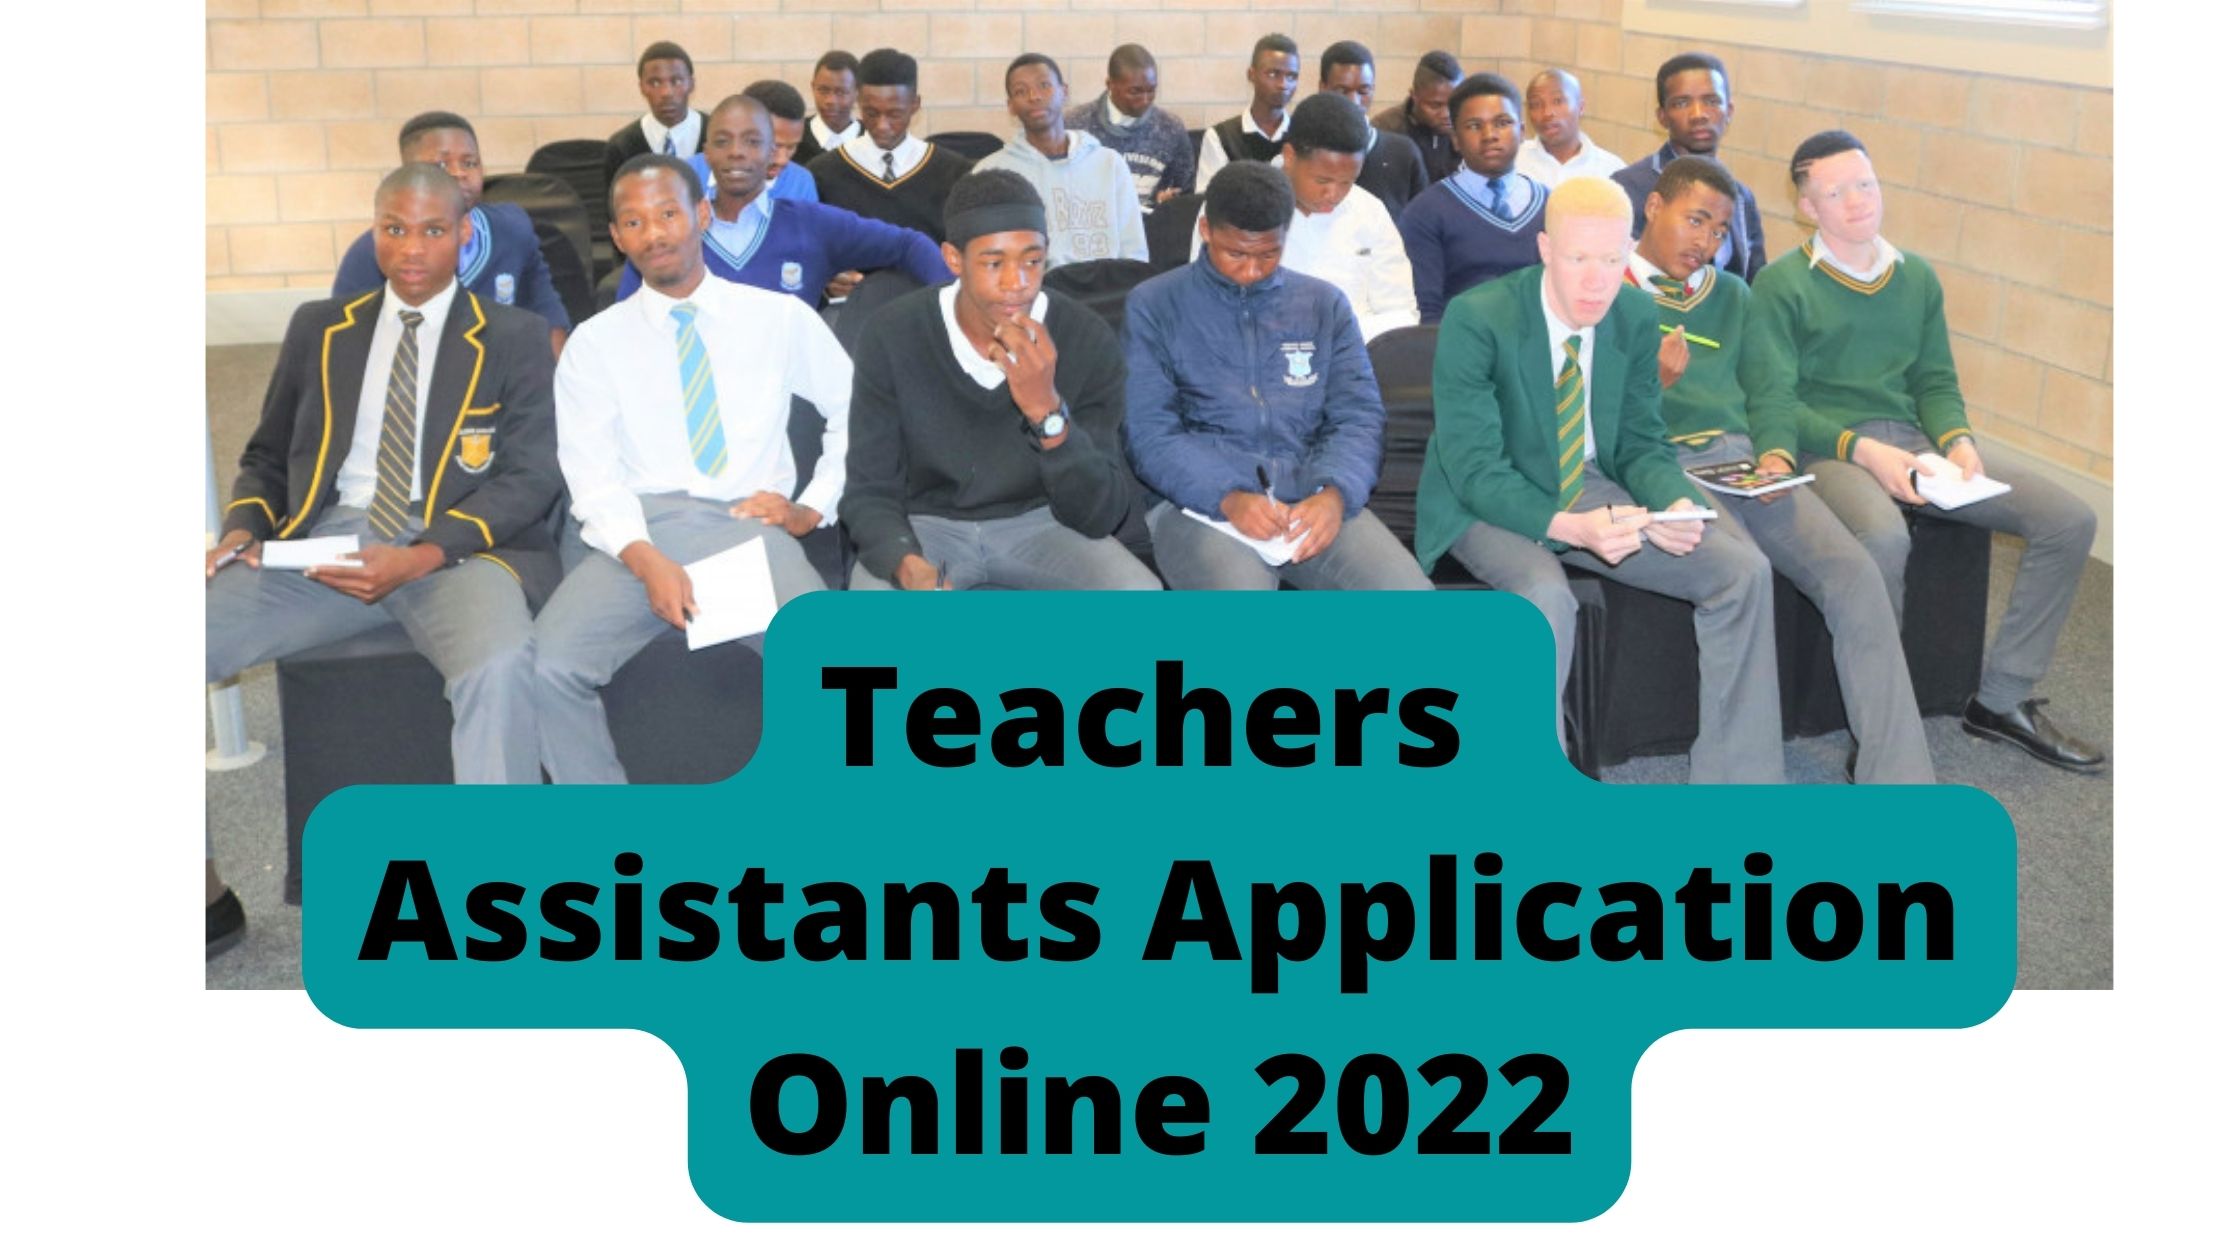 Teachers Assistants Application Online 2022